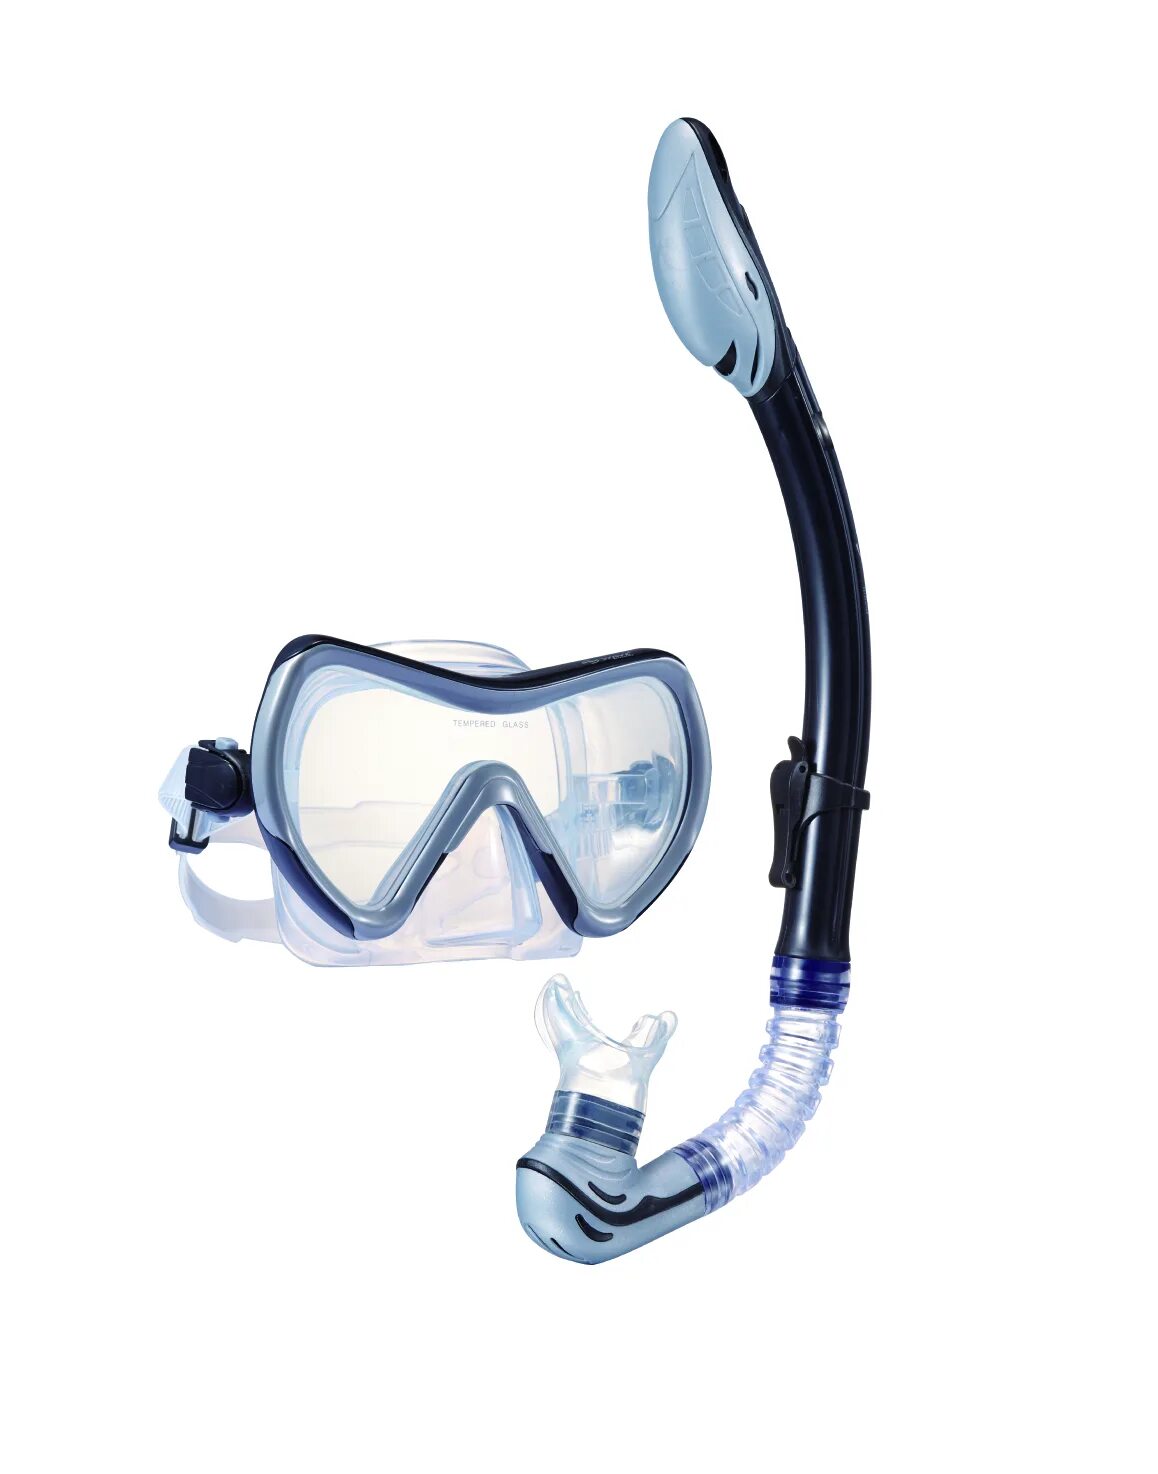 Mask Snorkel Set PVC маска+трубка. Маска для плавания Wave m-1314. Маска для плавания Wave m-1328. Маска с трубкой Советская. Pro for wave маска